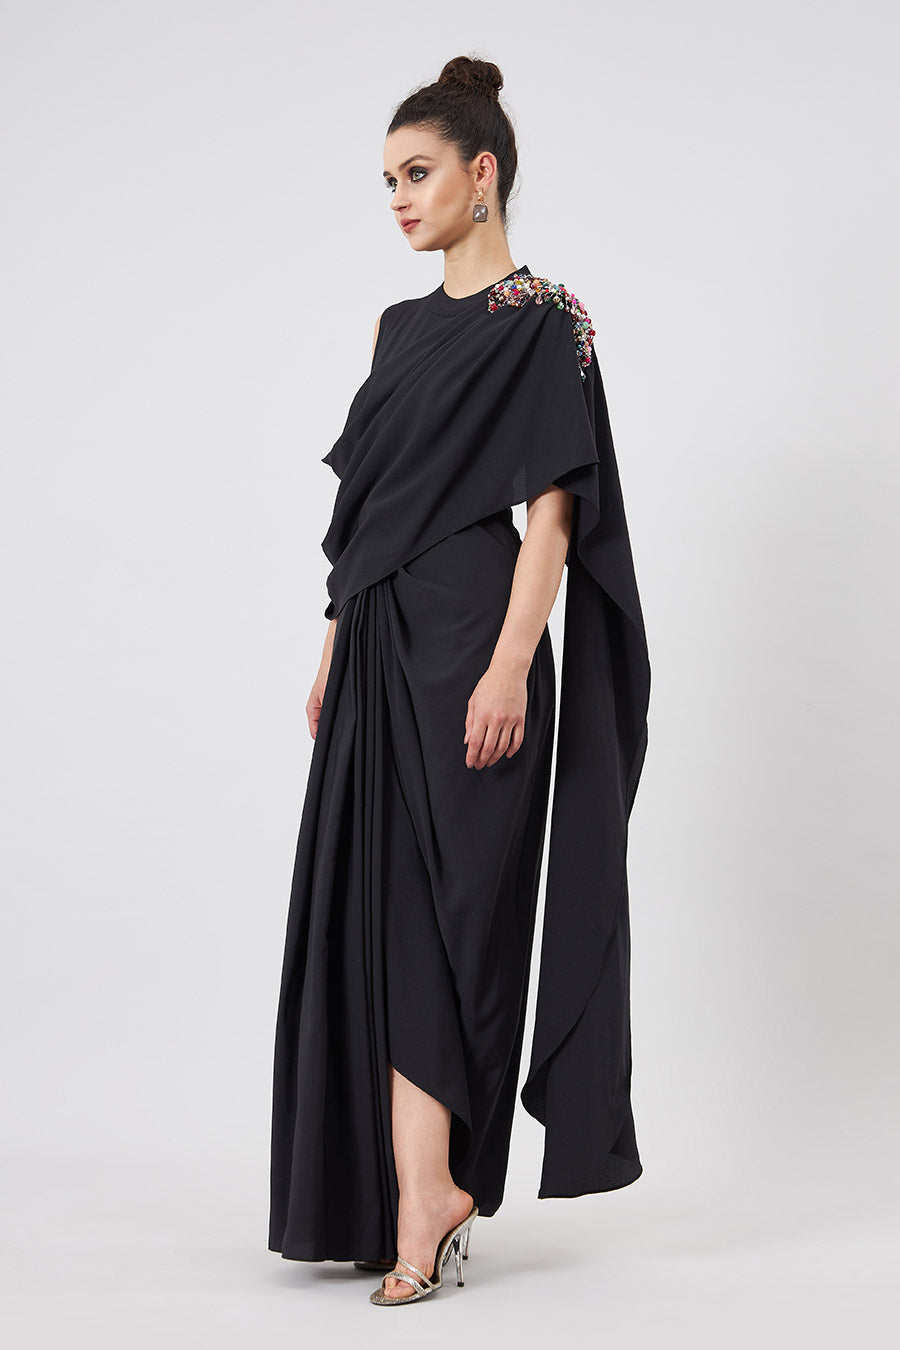 Black Embellished Cowl Drape Dress